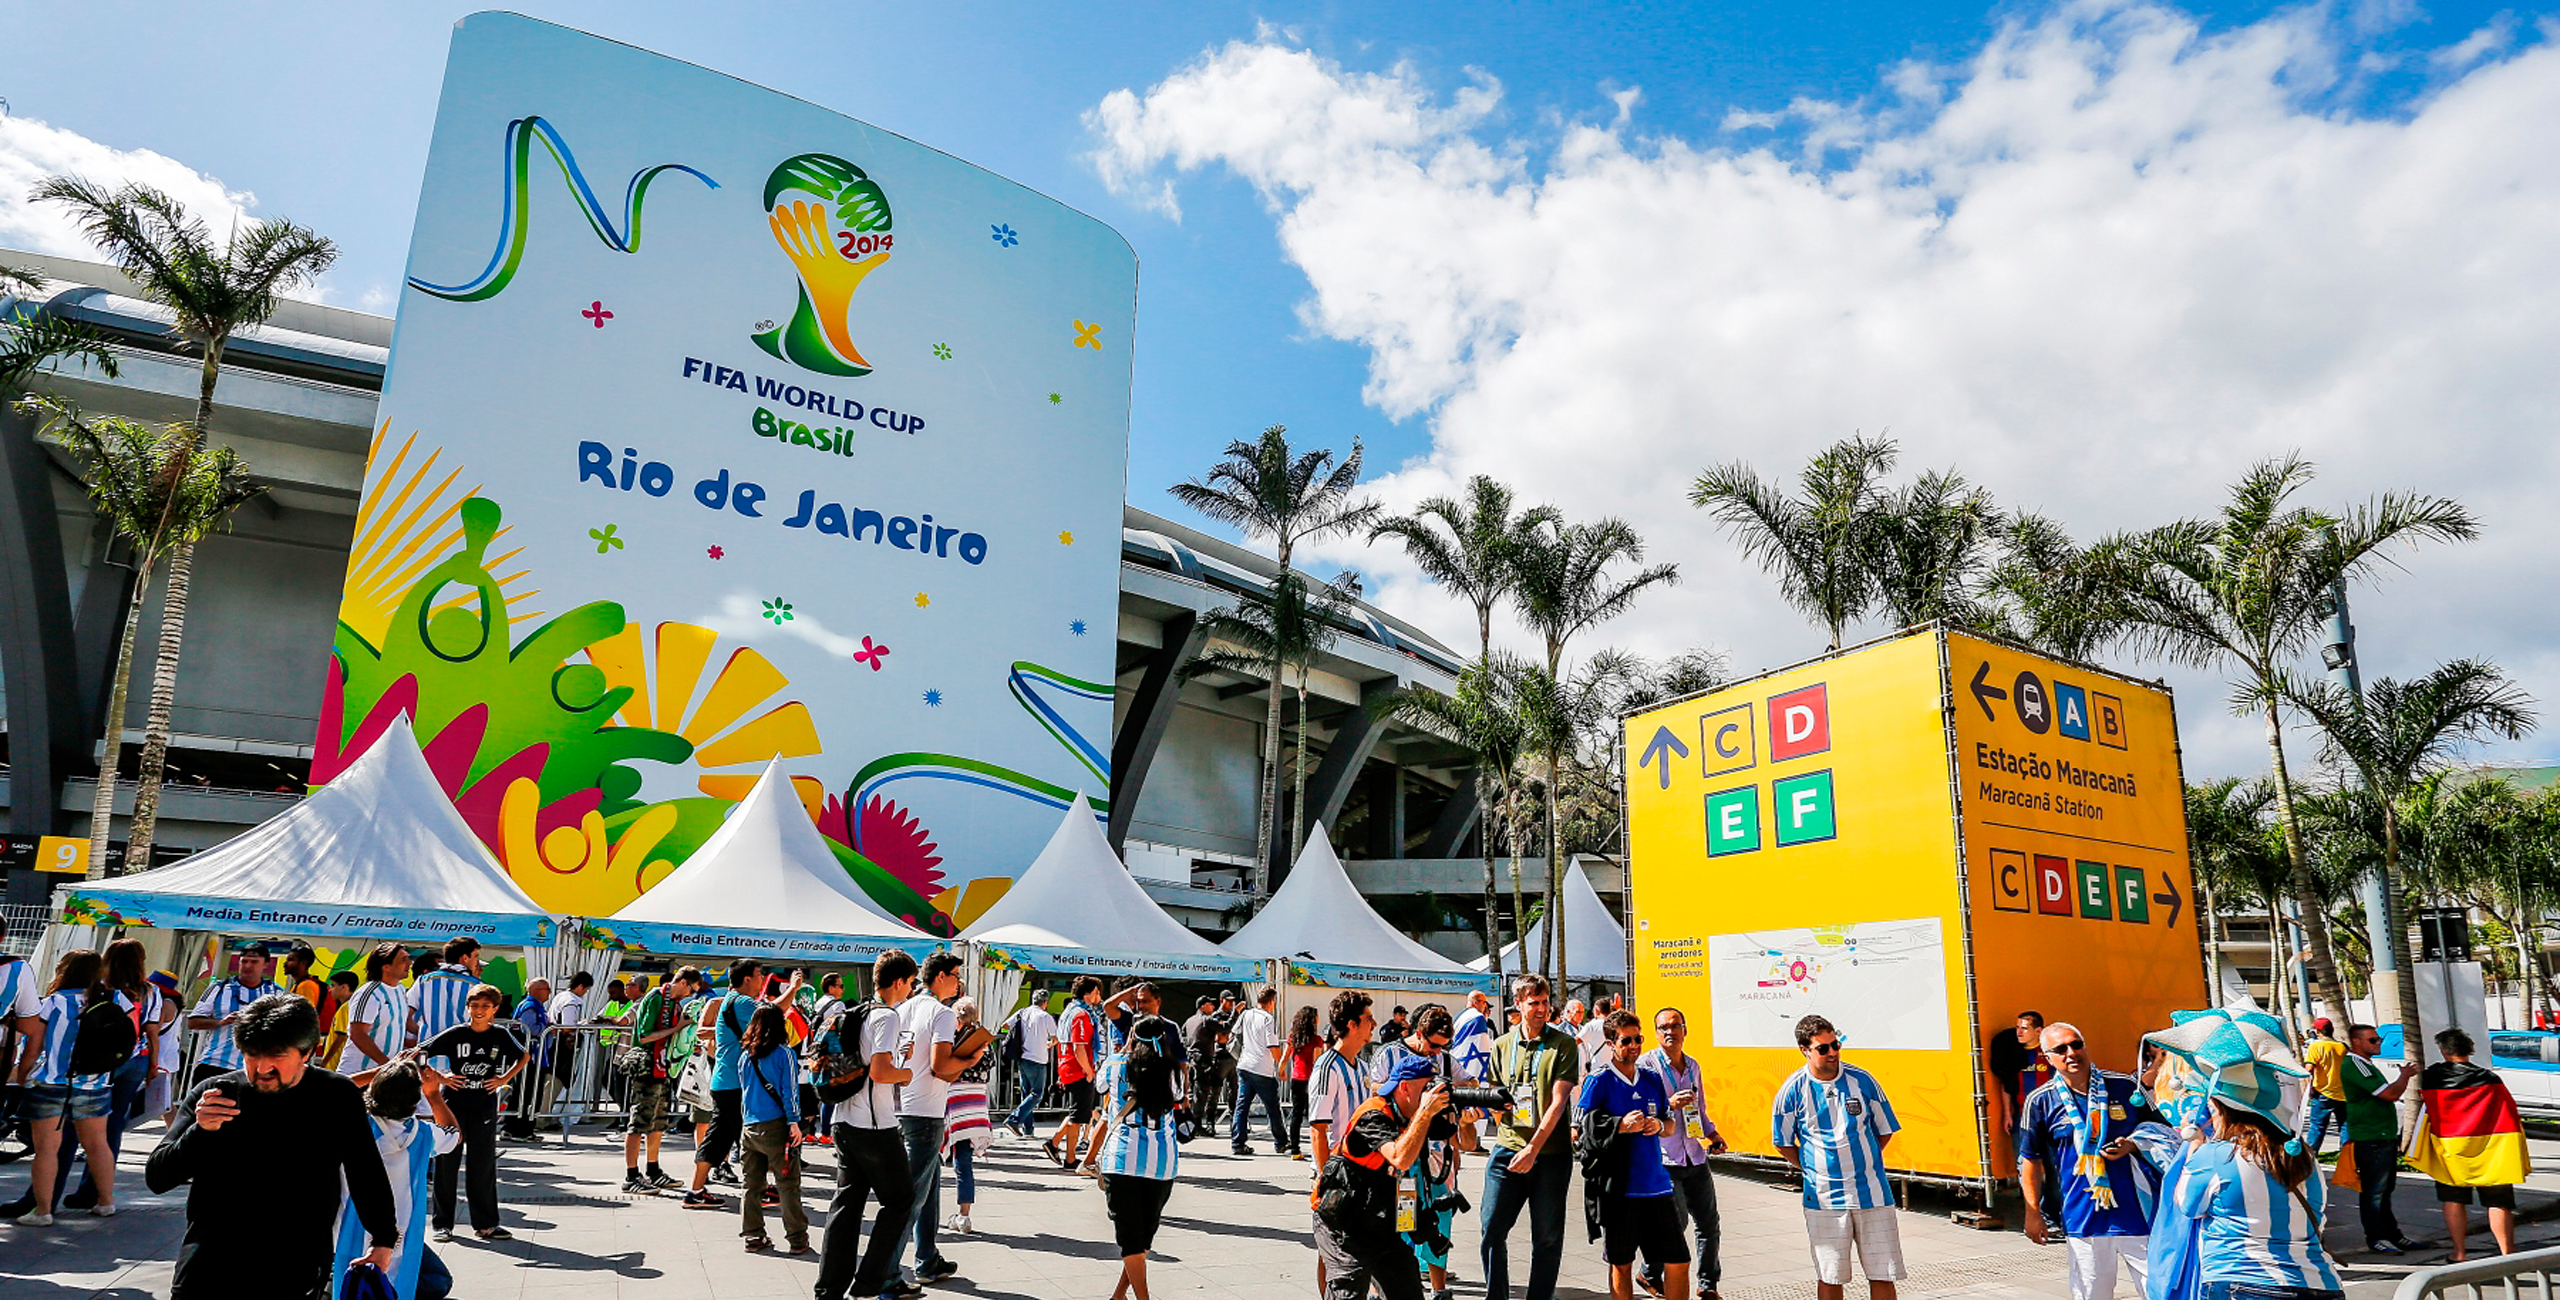 FIFA World Cup Brazil, Rio de Janeiro, event branding, wayfinding and signage